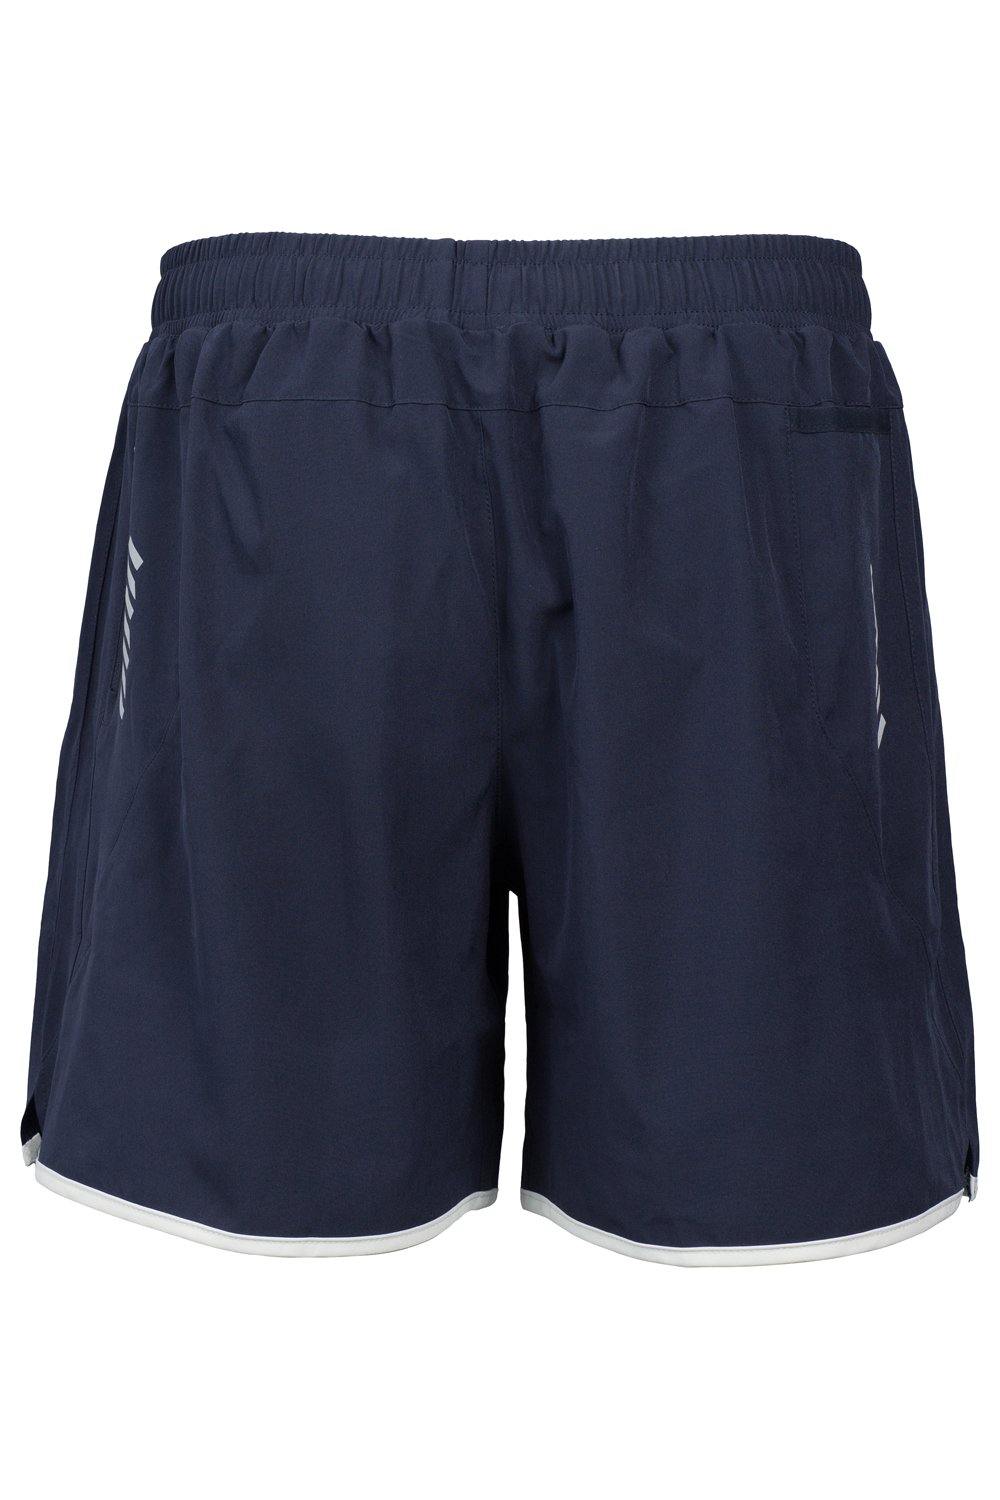 Sundried Legacy Men's 5" Running Shorts Shorts Activewear